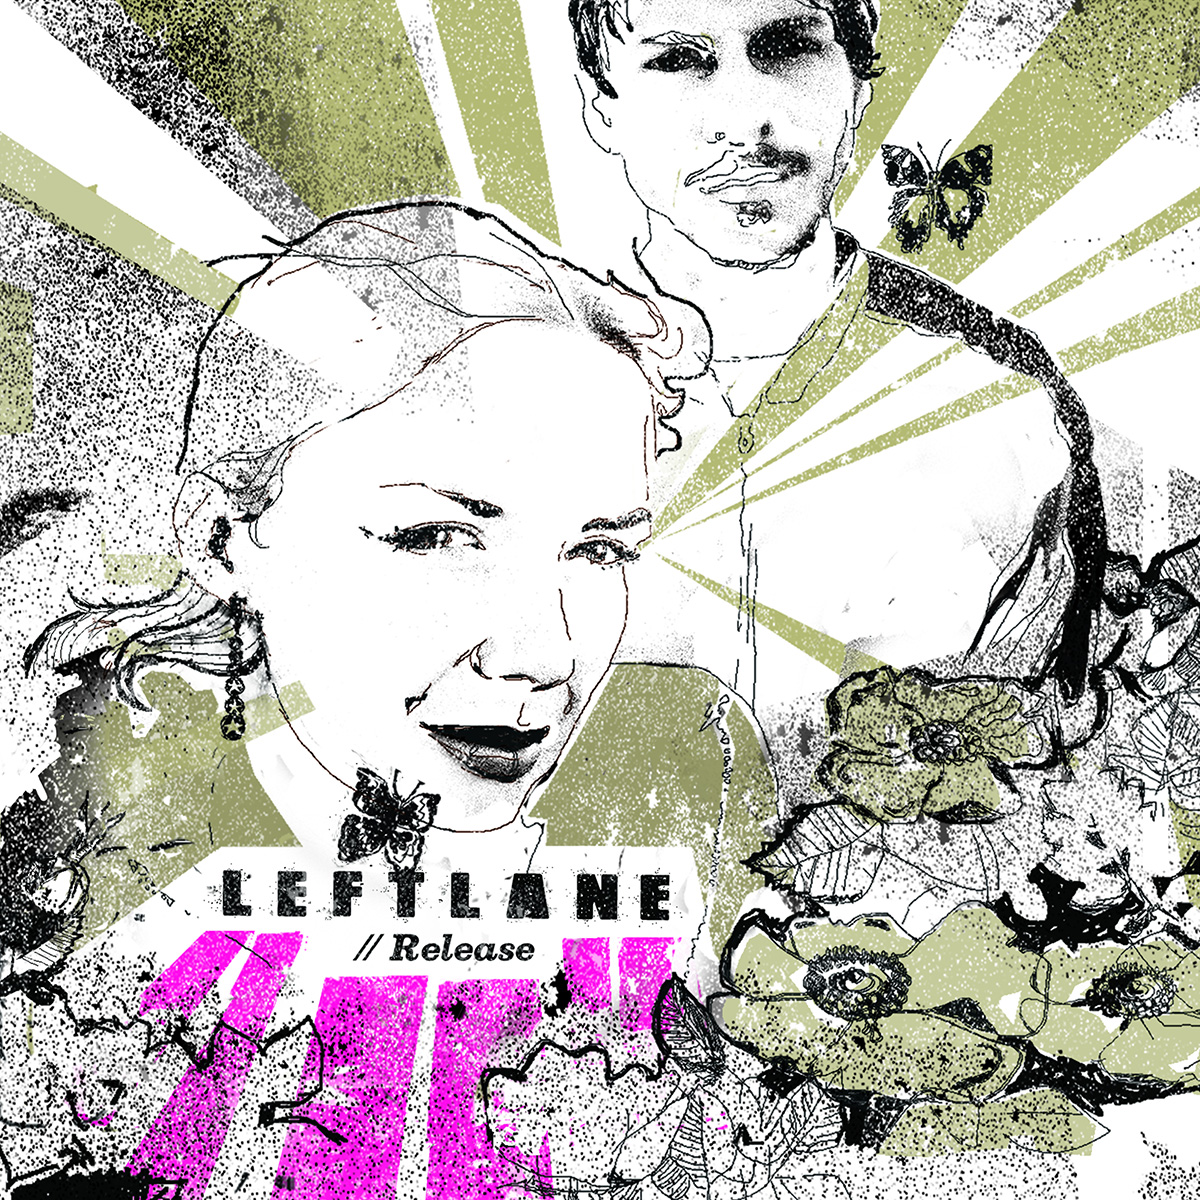 Leftlane - Release